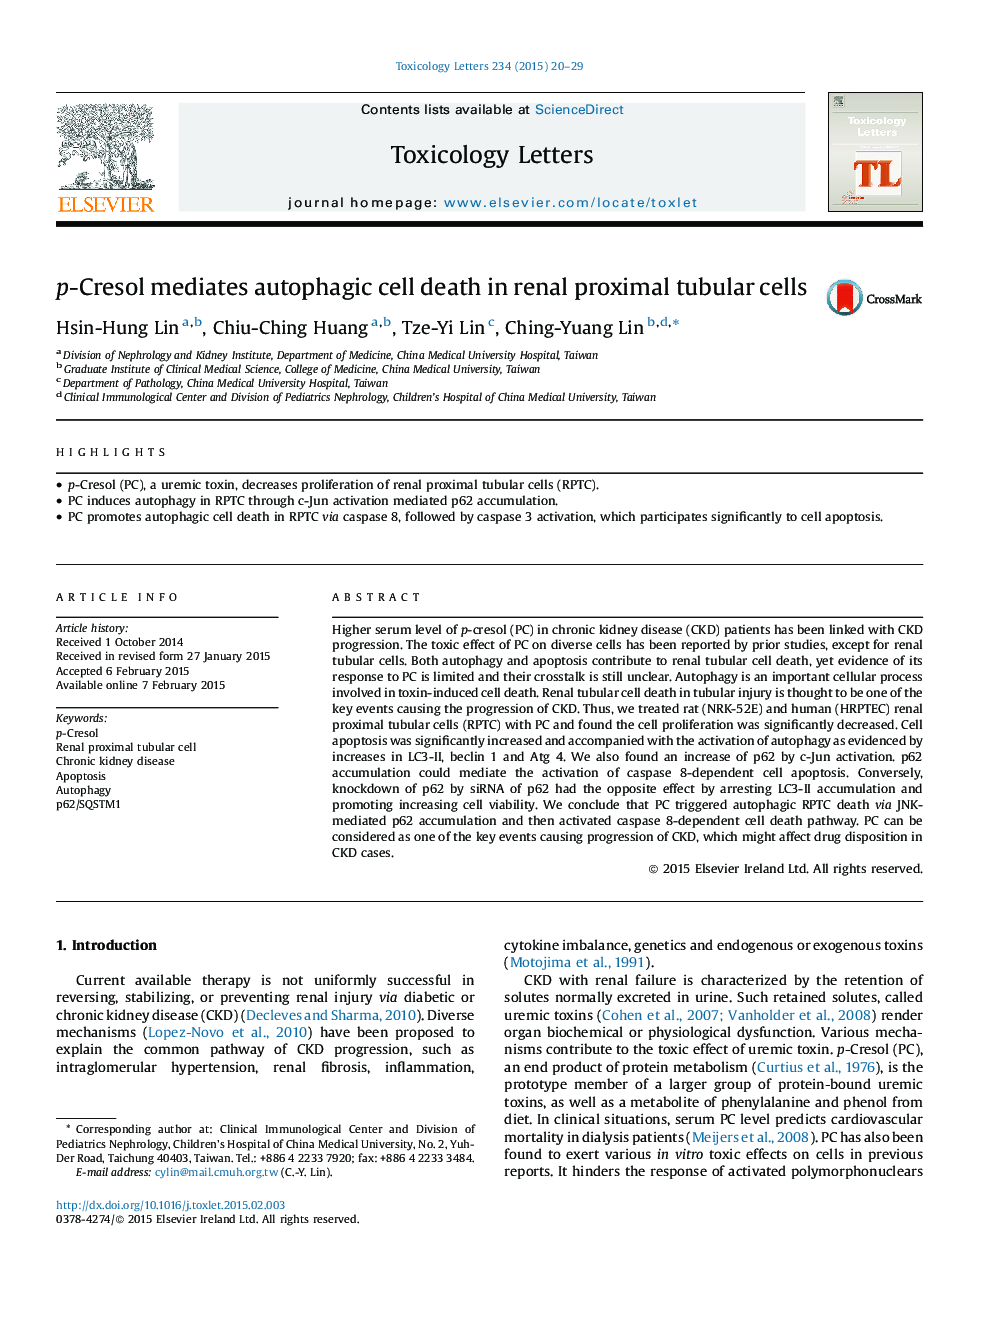 p-Cresol mediates autophagic cell death in renal proximal tubular cells